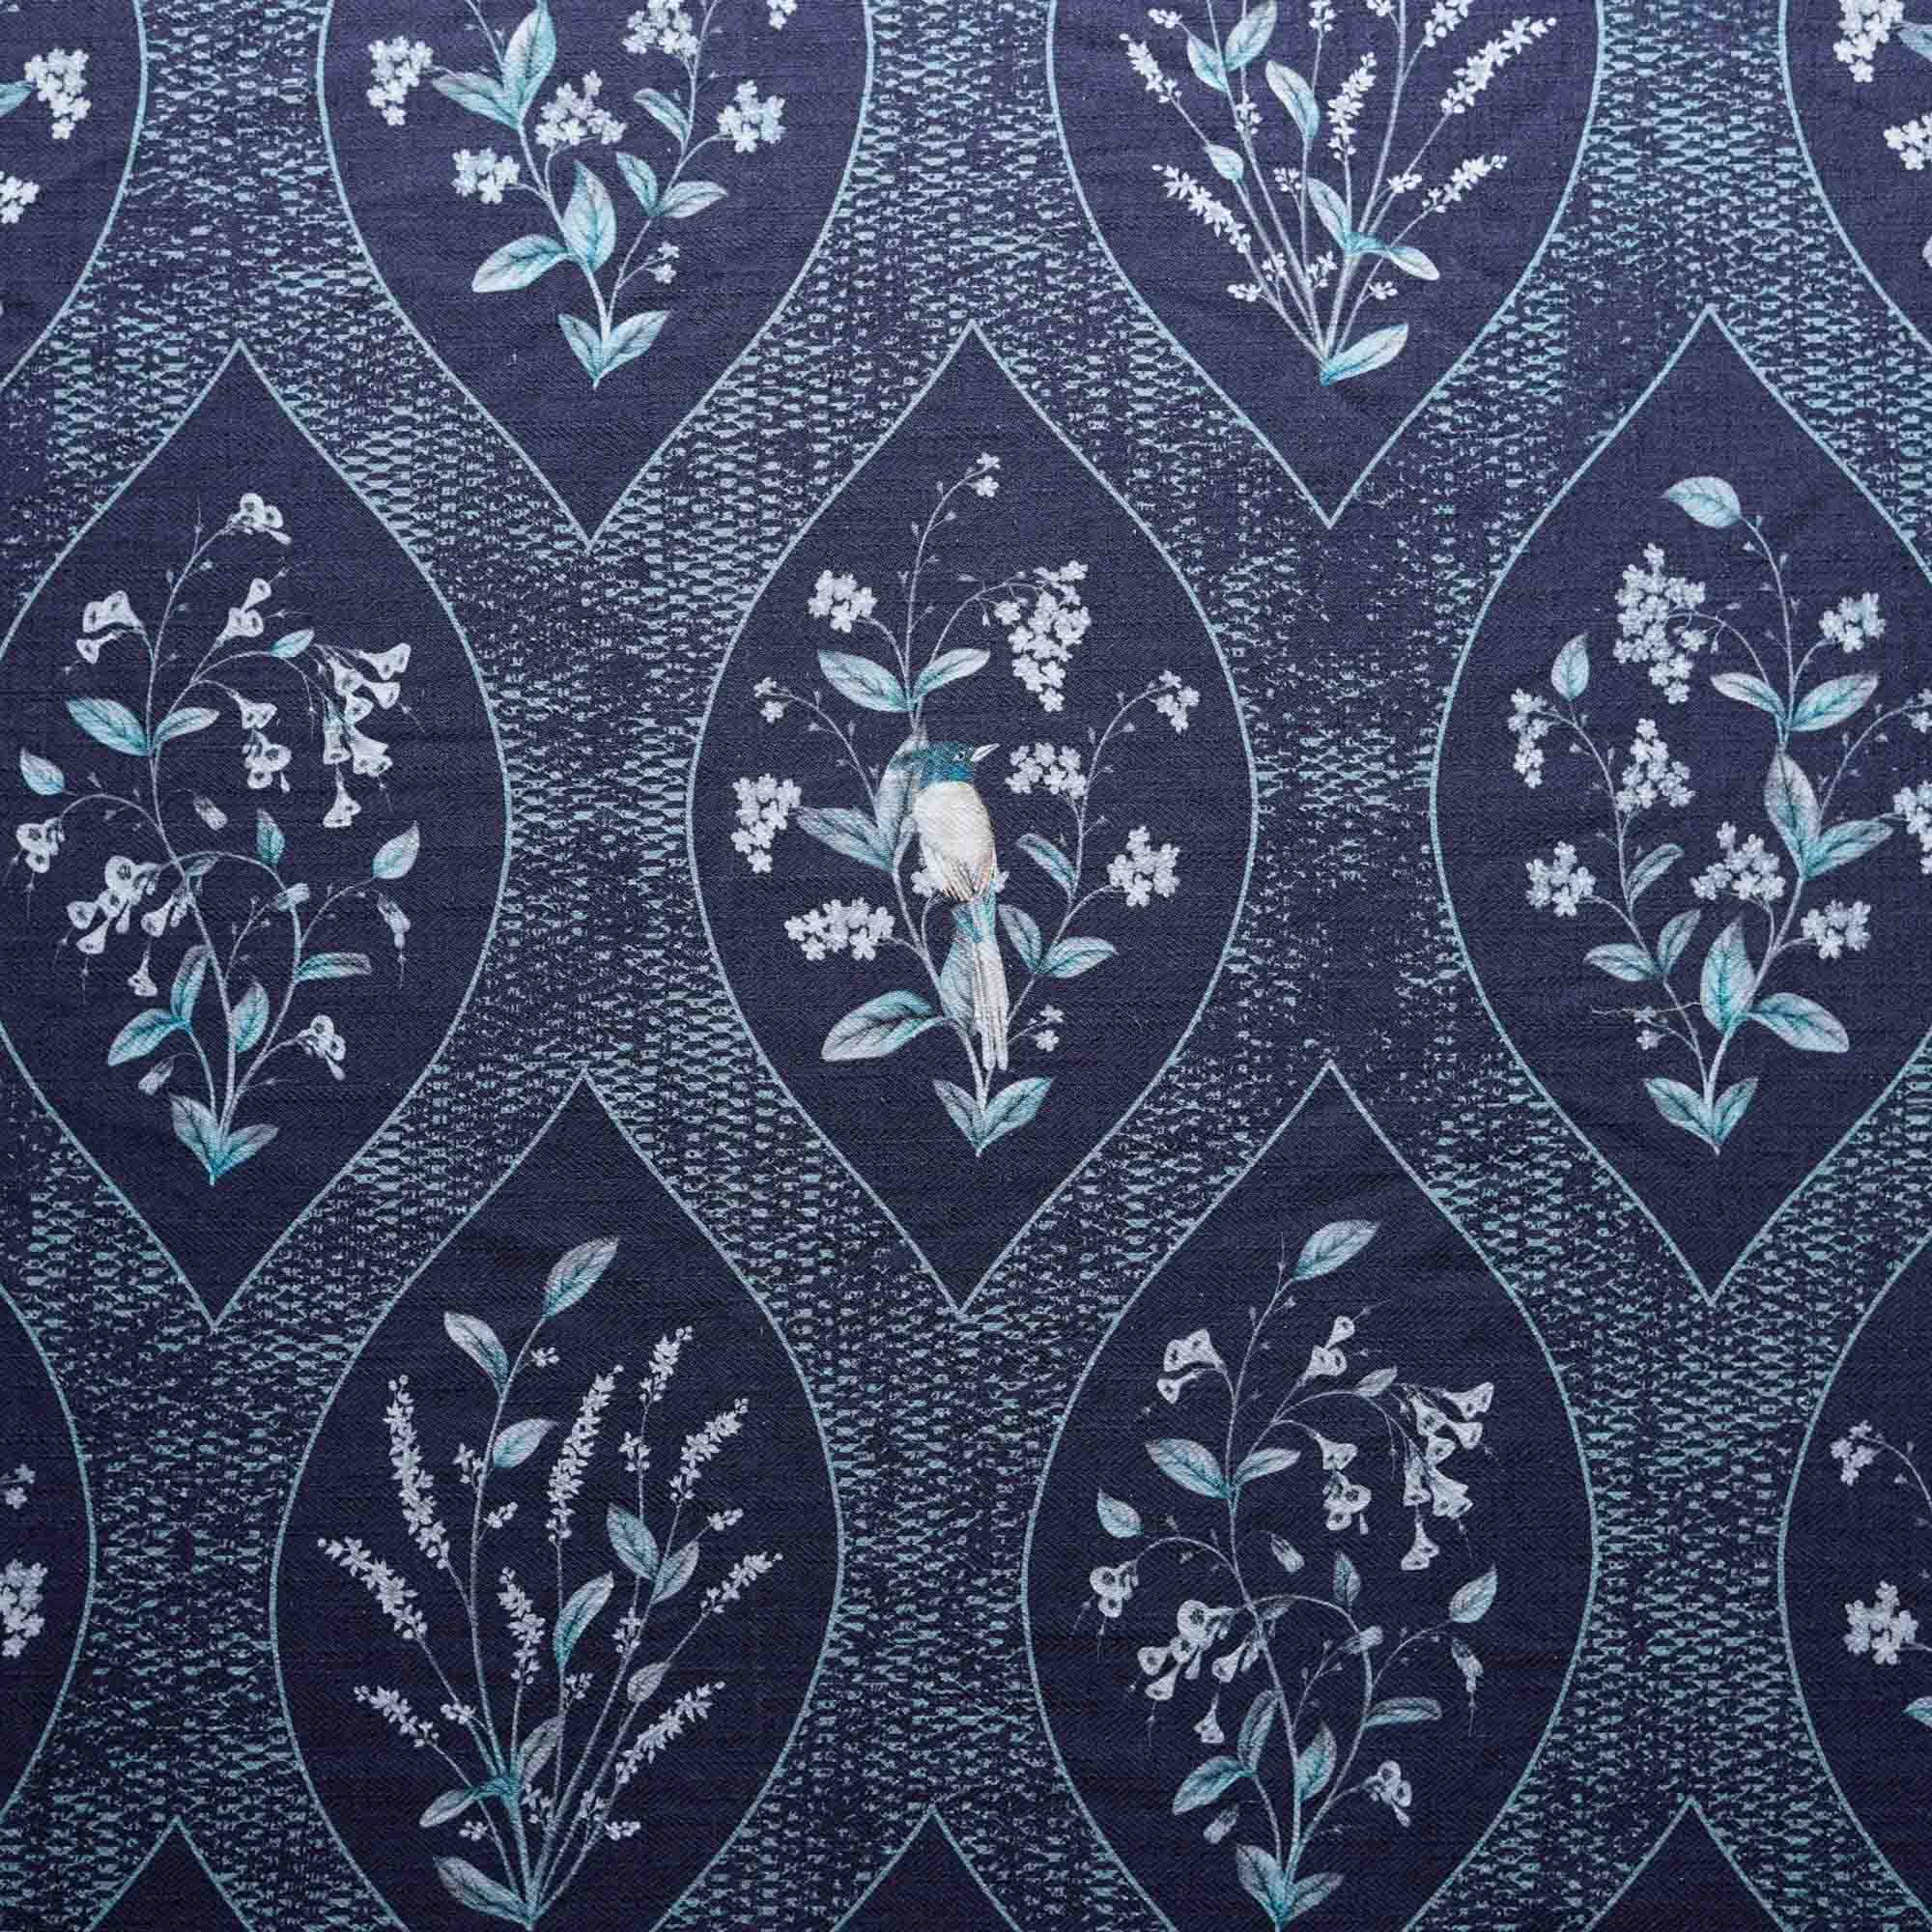 A Persian Corridor Winter Cotton Linen Blend Fabric